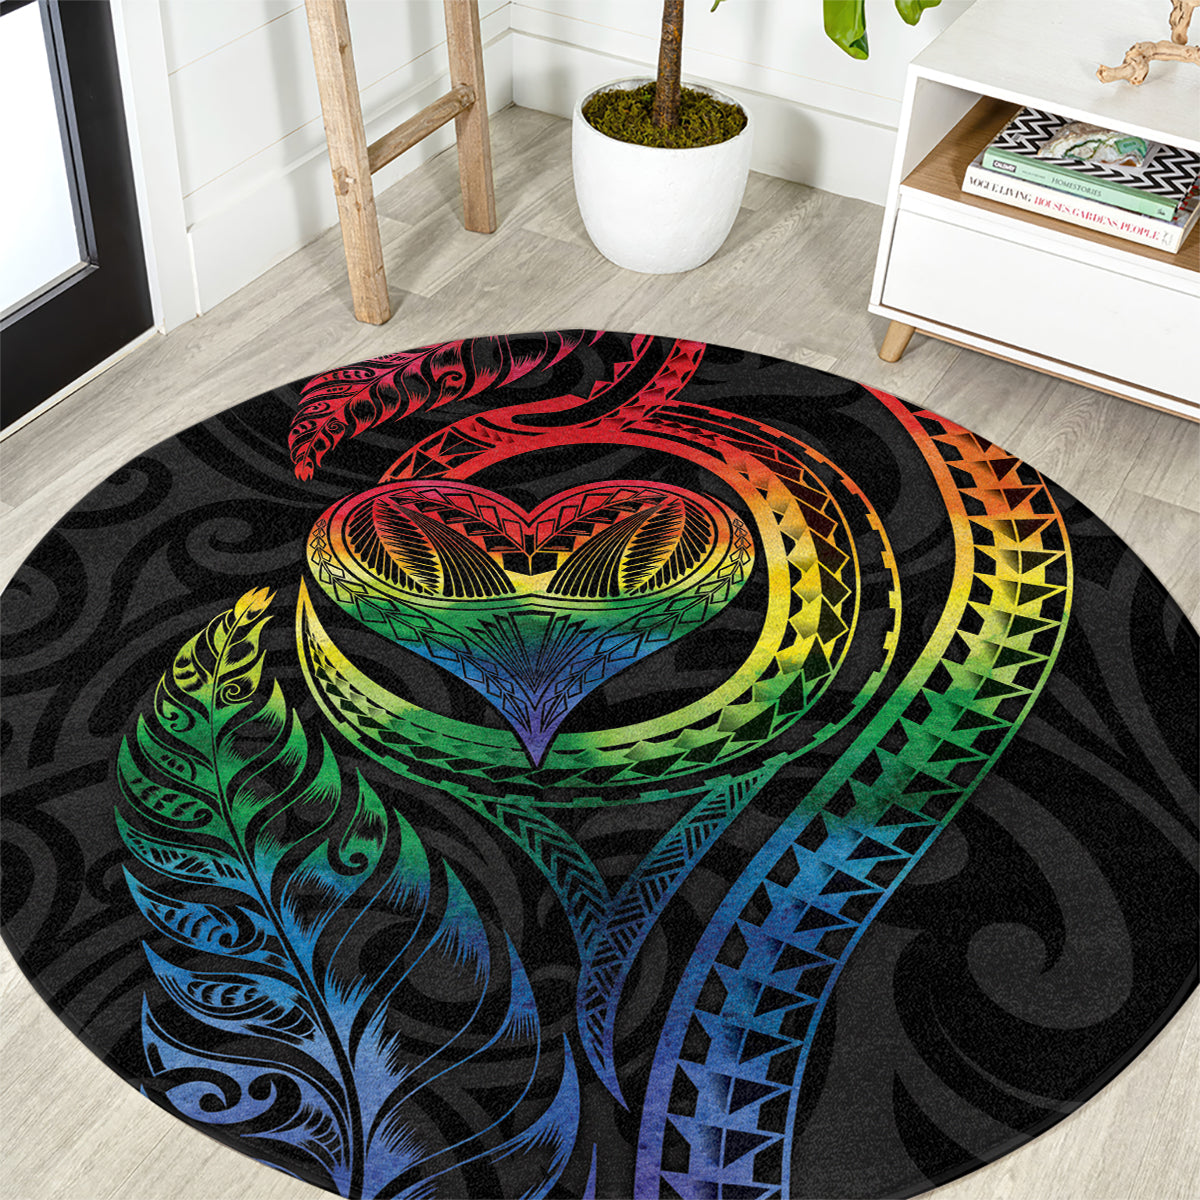 New Zealand Pride Round Carpet Takatapui Rainbow Fern